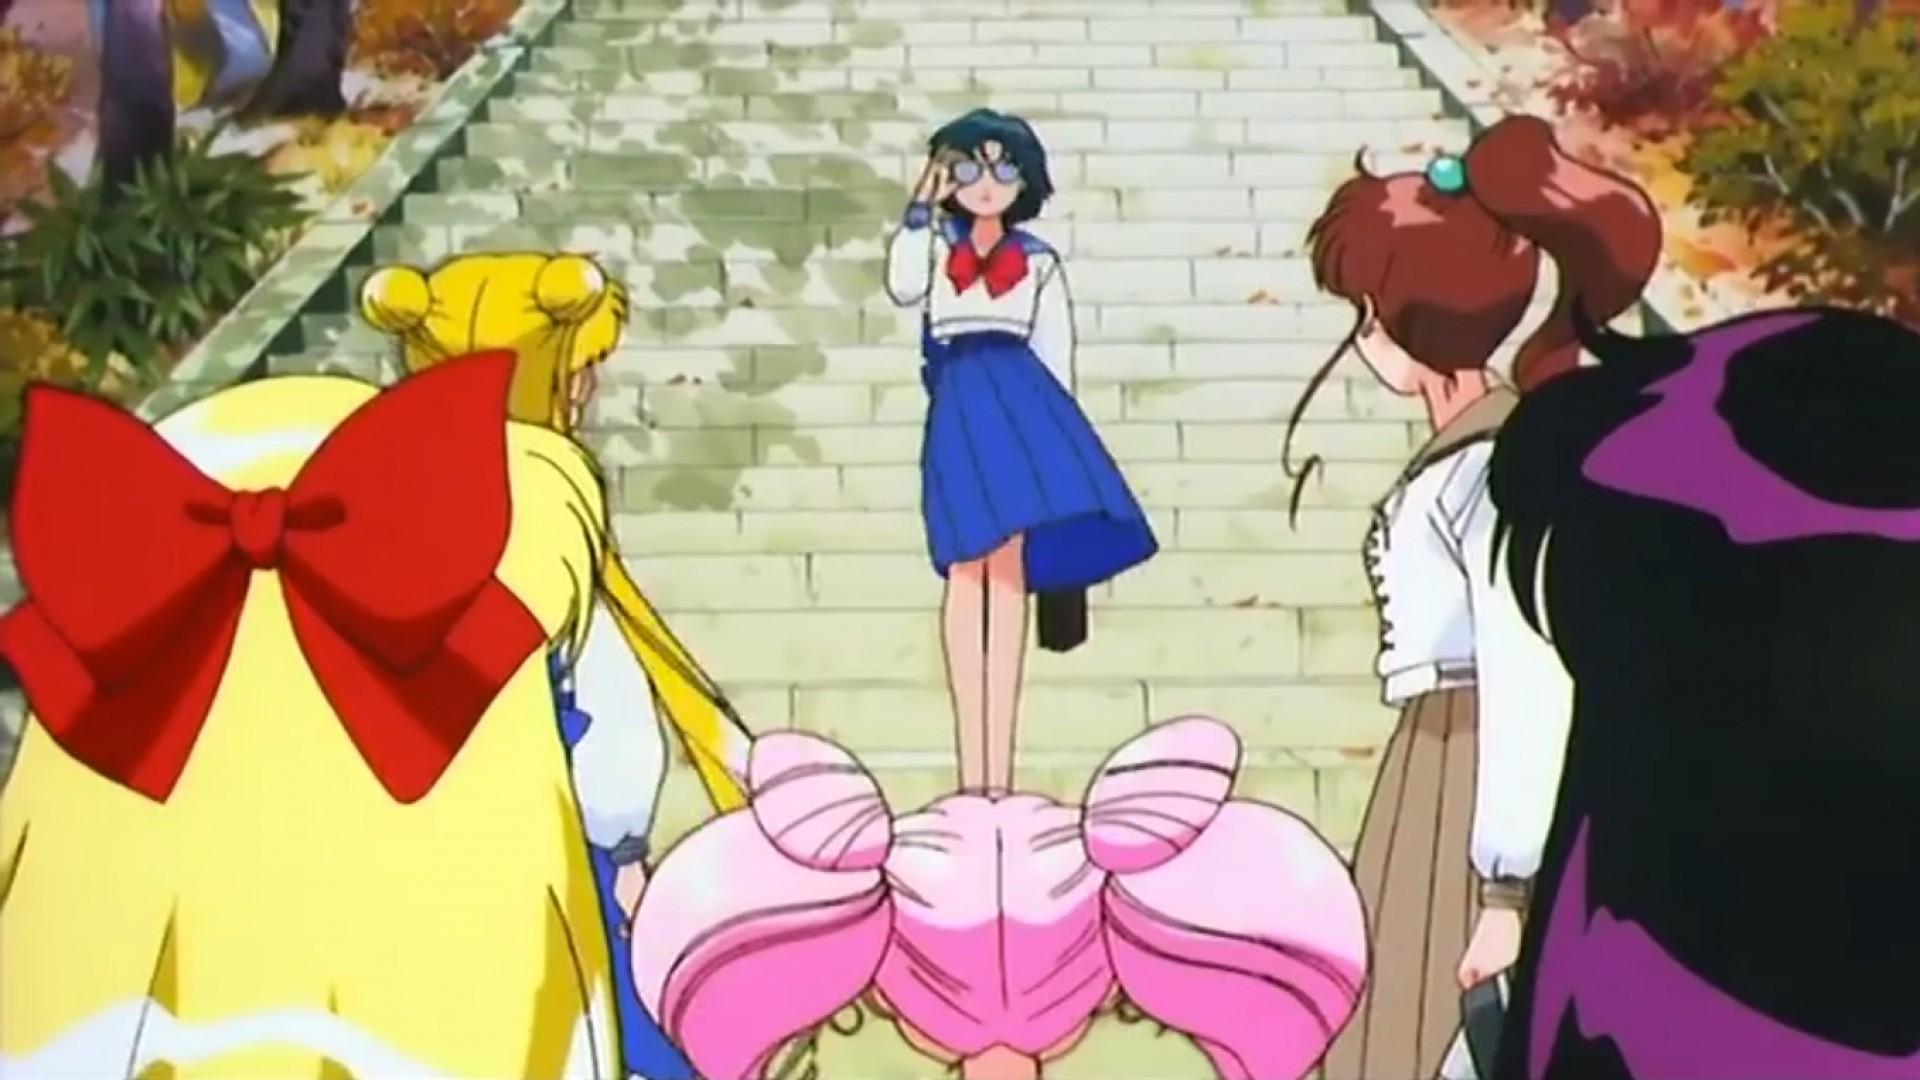 Sailor Moon Super S: Ami's First Love